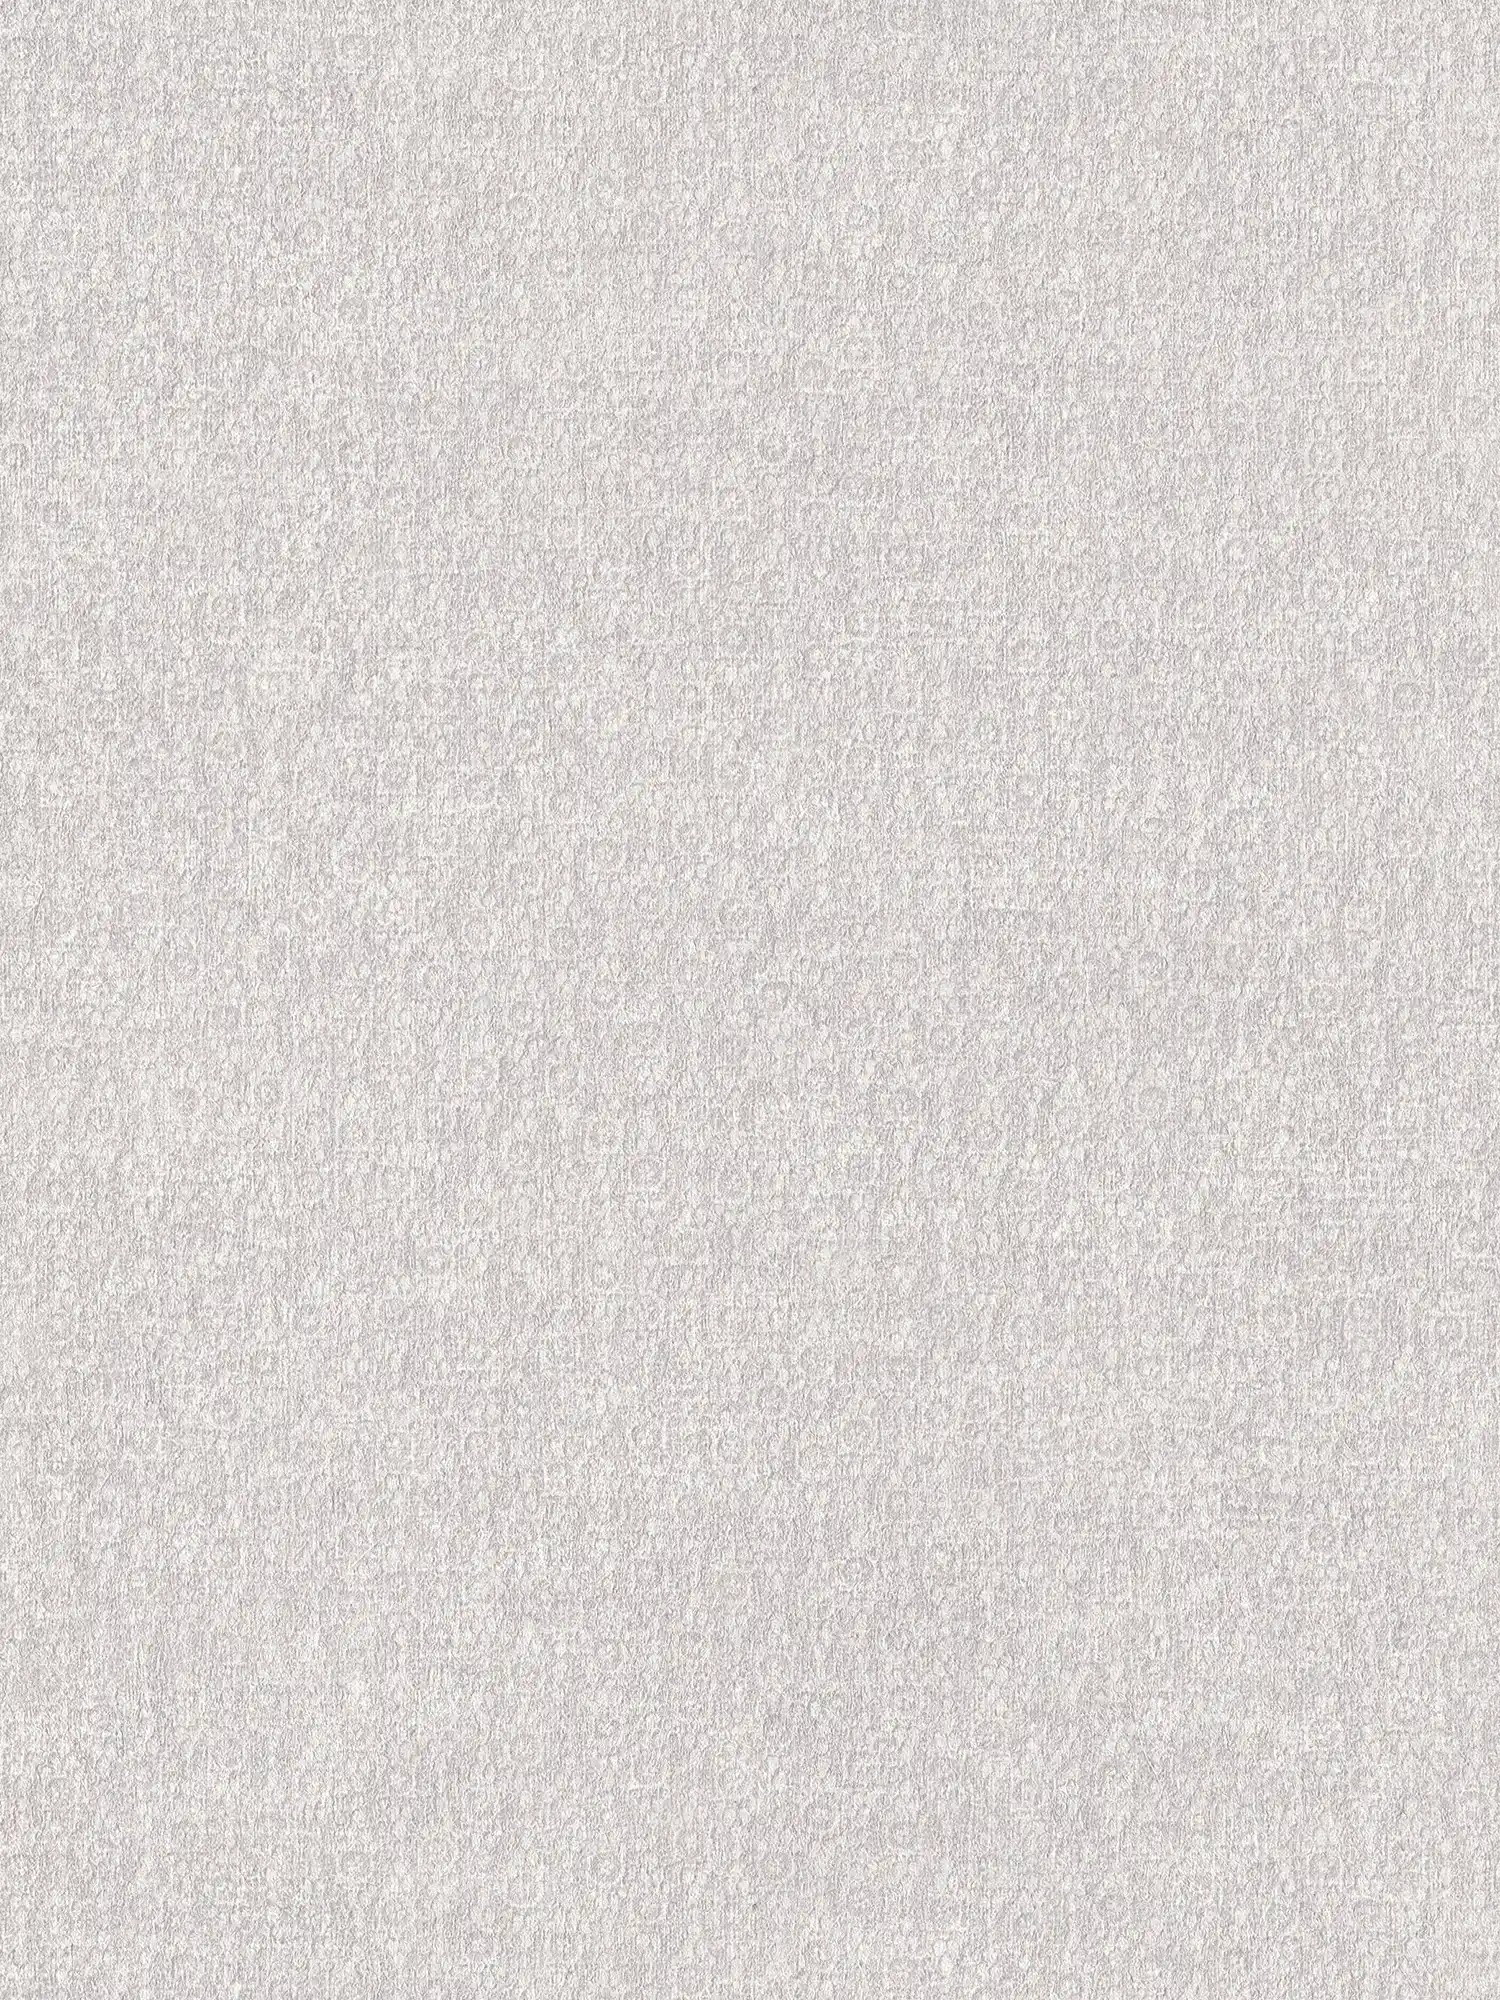 Papel pintado liso no tejido crema con efecto de textura textil
